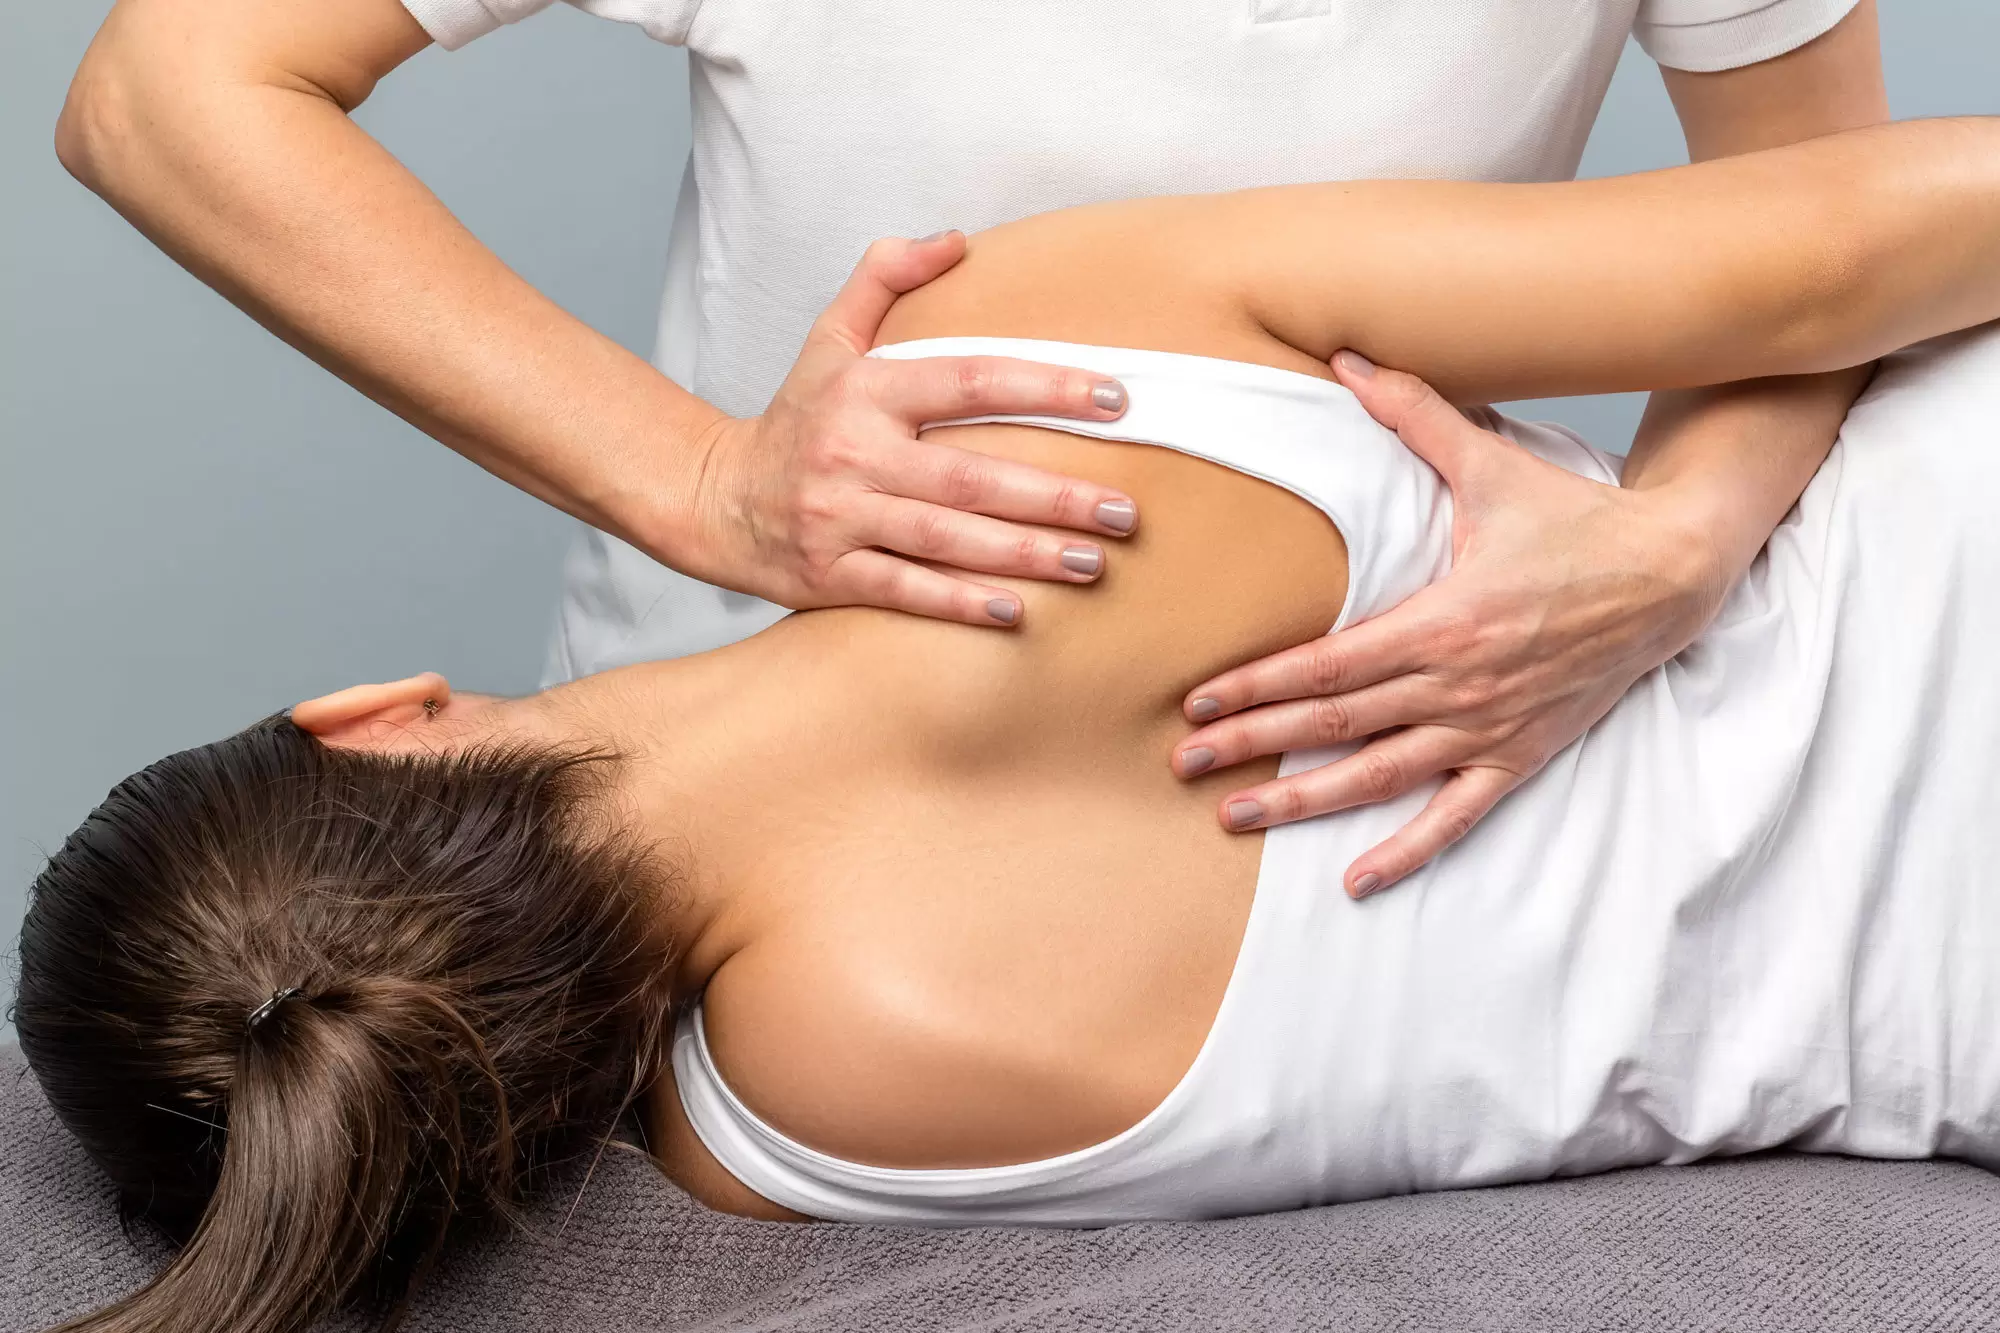 Massage Therapy Image - Swedish Institute - New York, NY